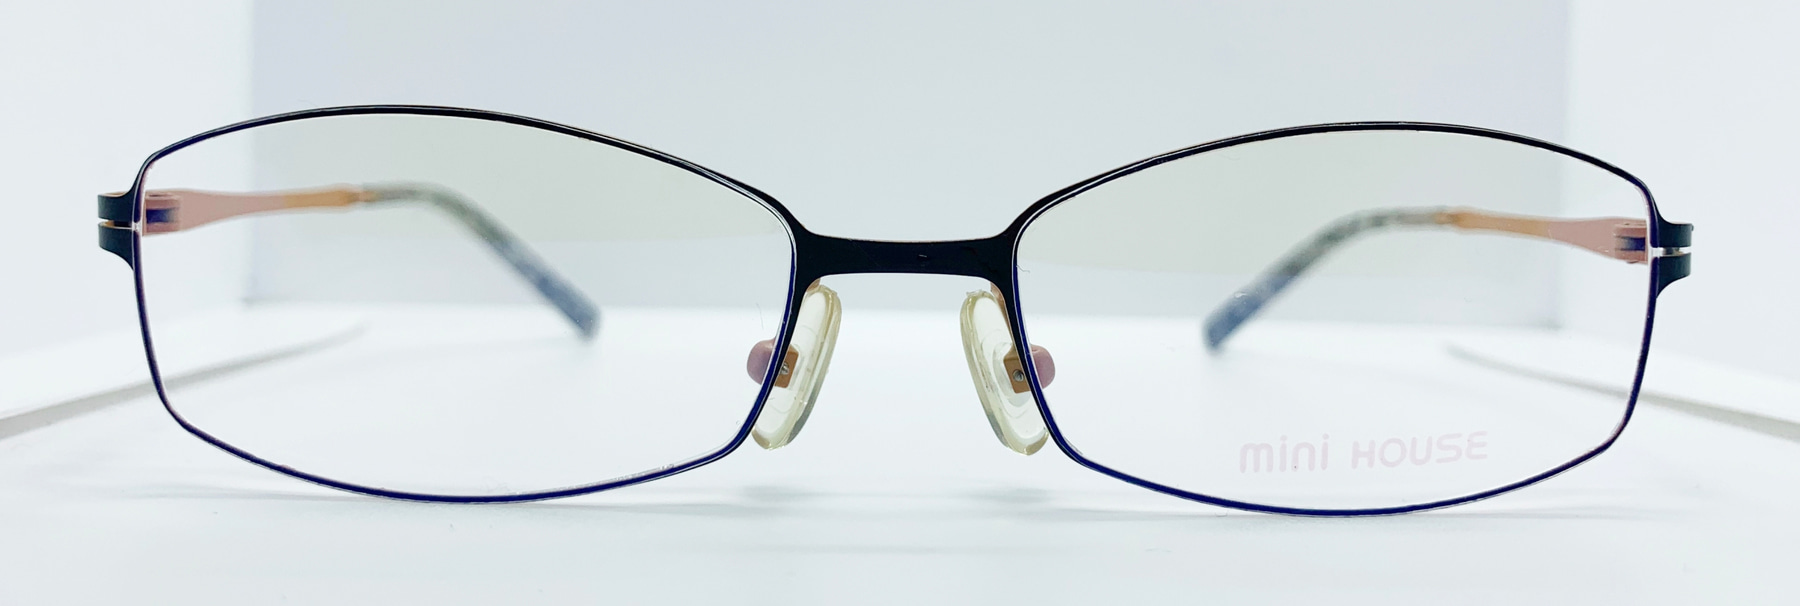 MINIHOUSE M-10, Korean glasses, sunglasses, eyeglasses, glasses